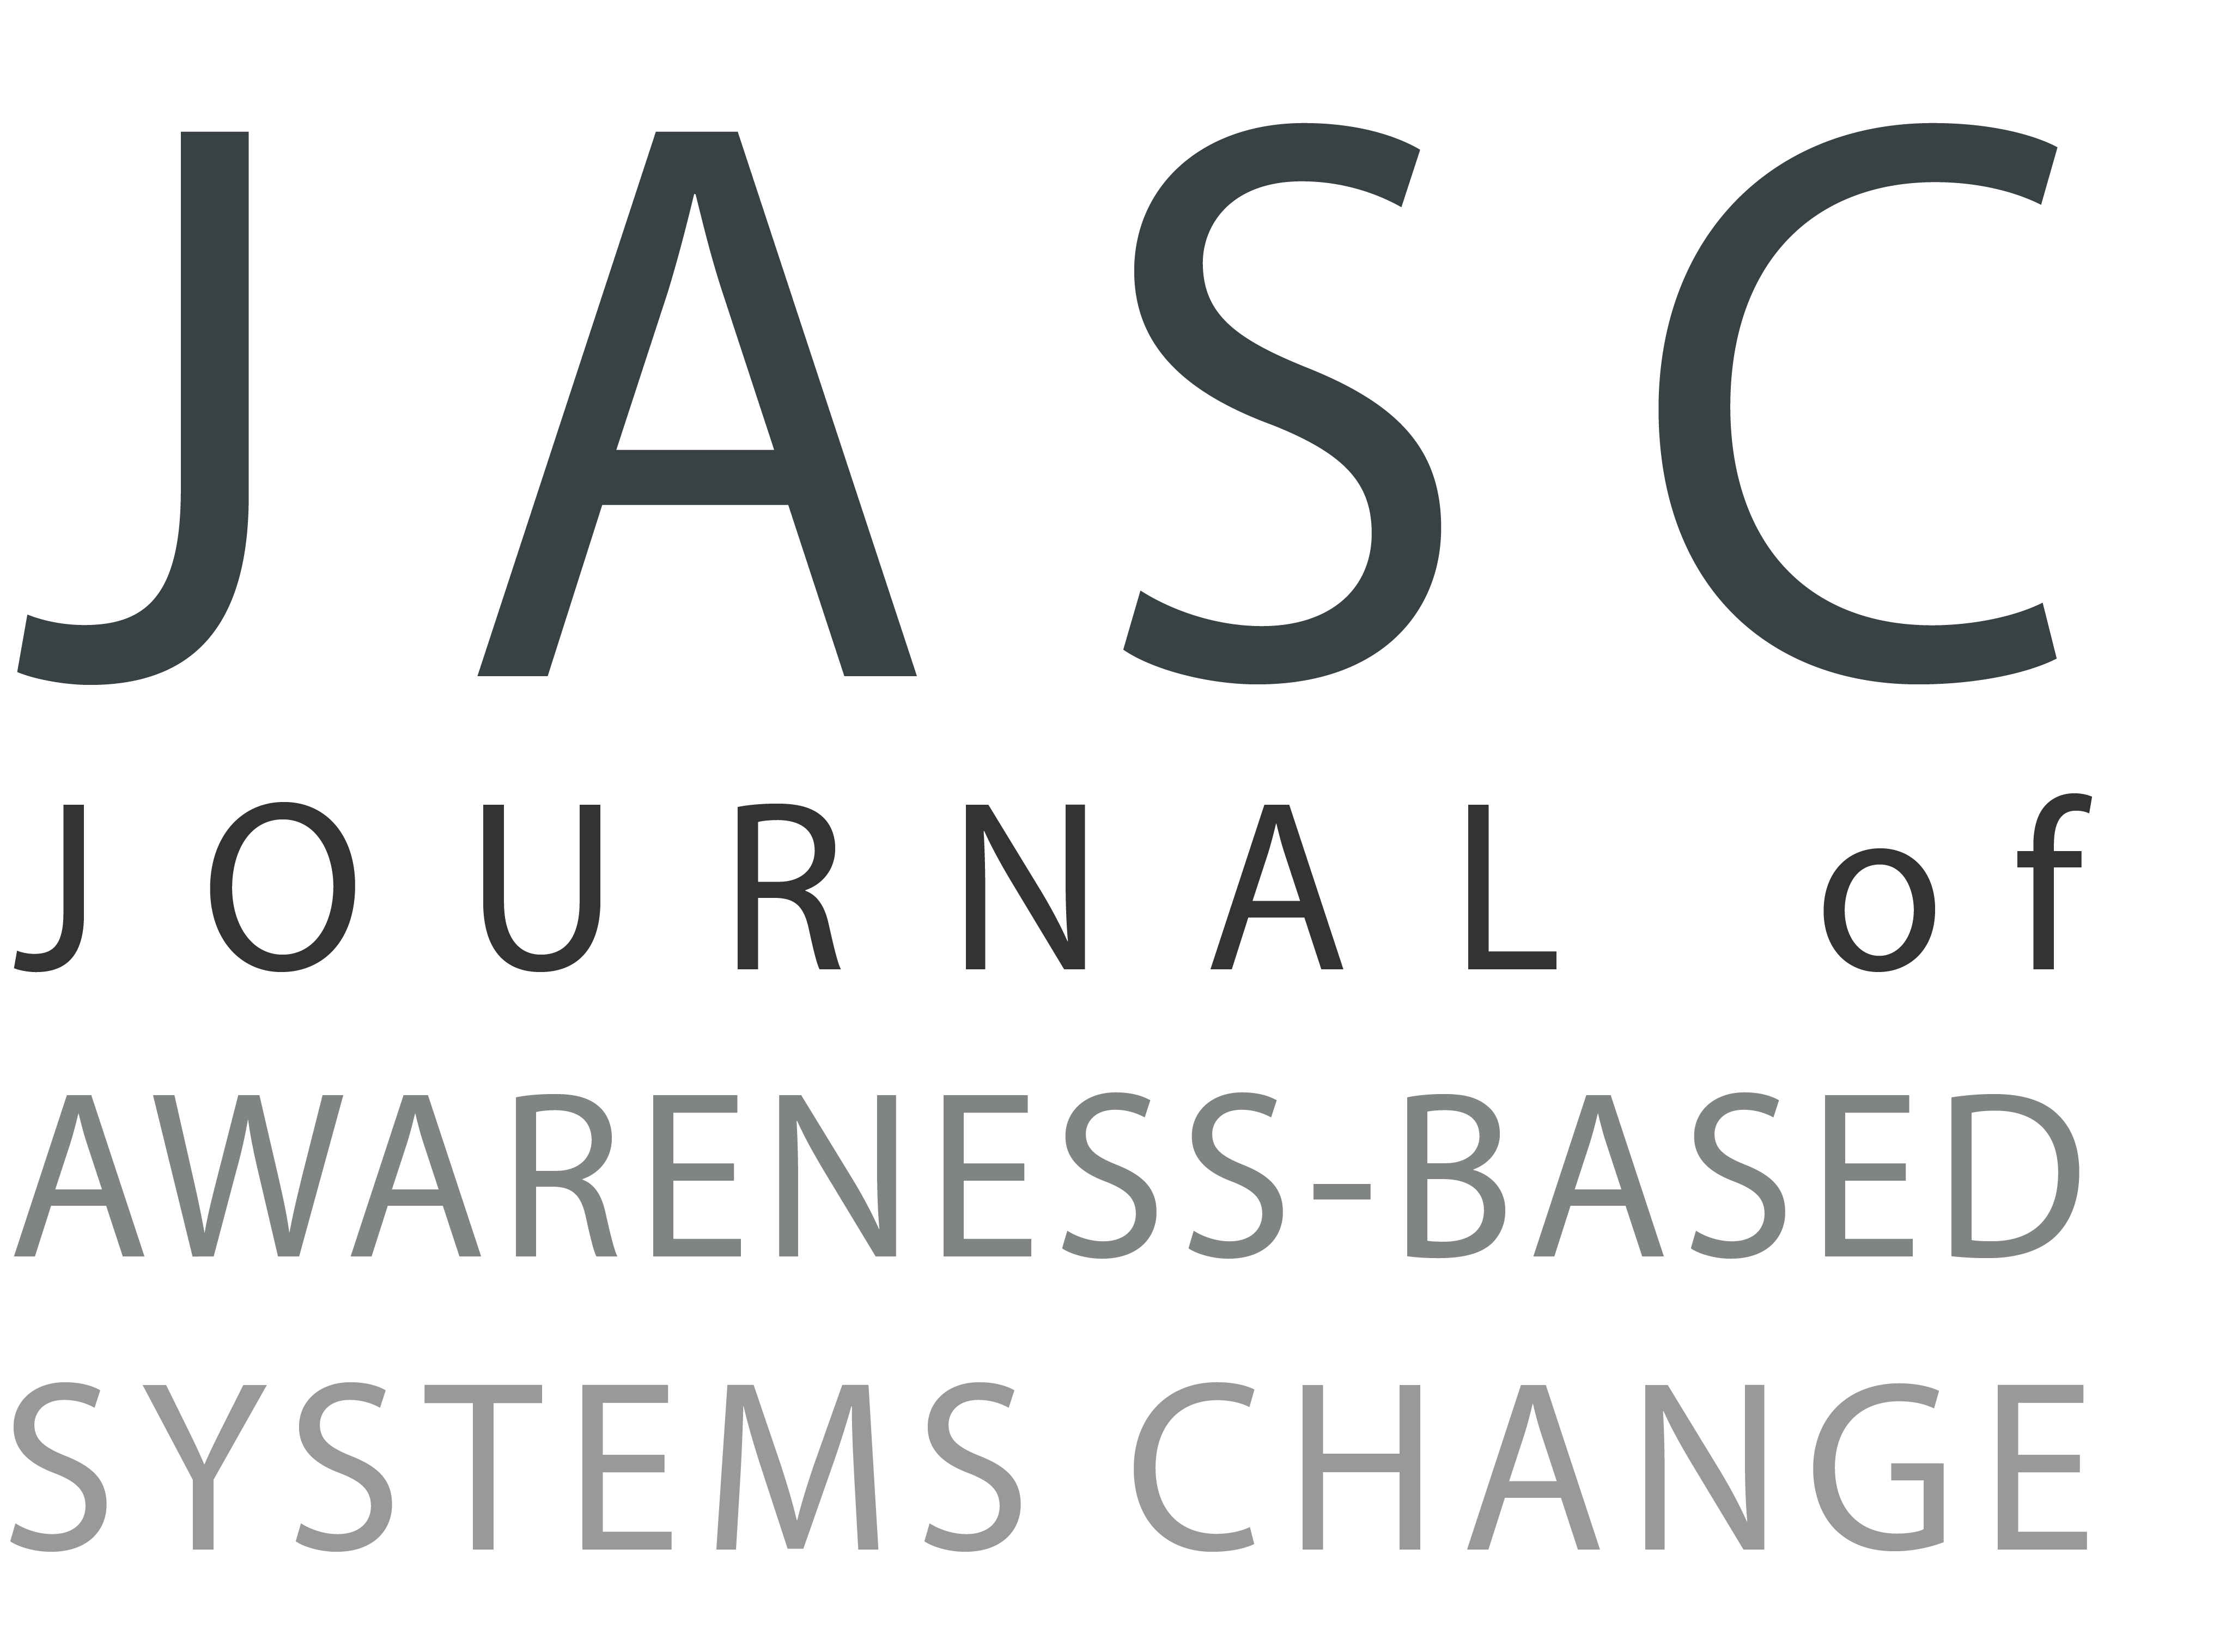 Journal of Awareness-Based Systems Change logo